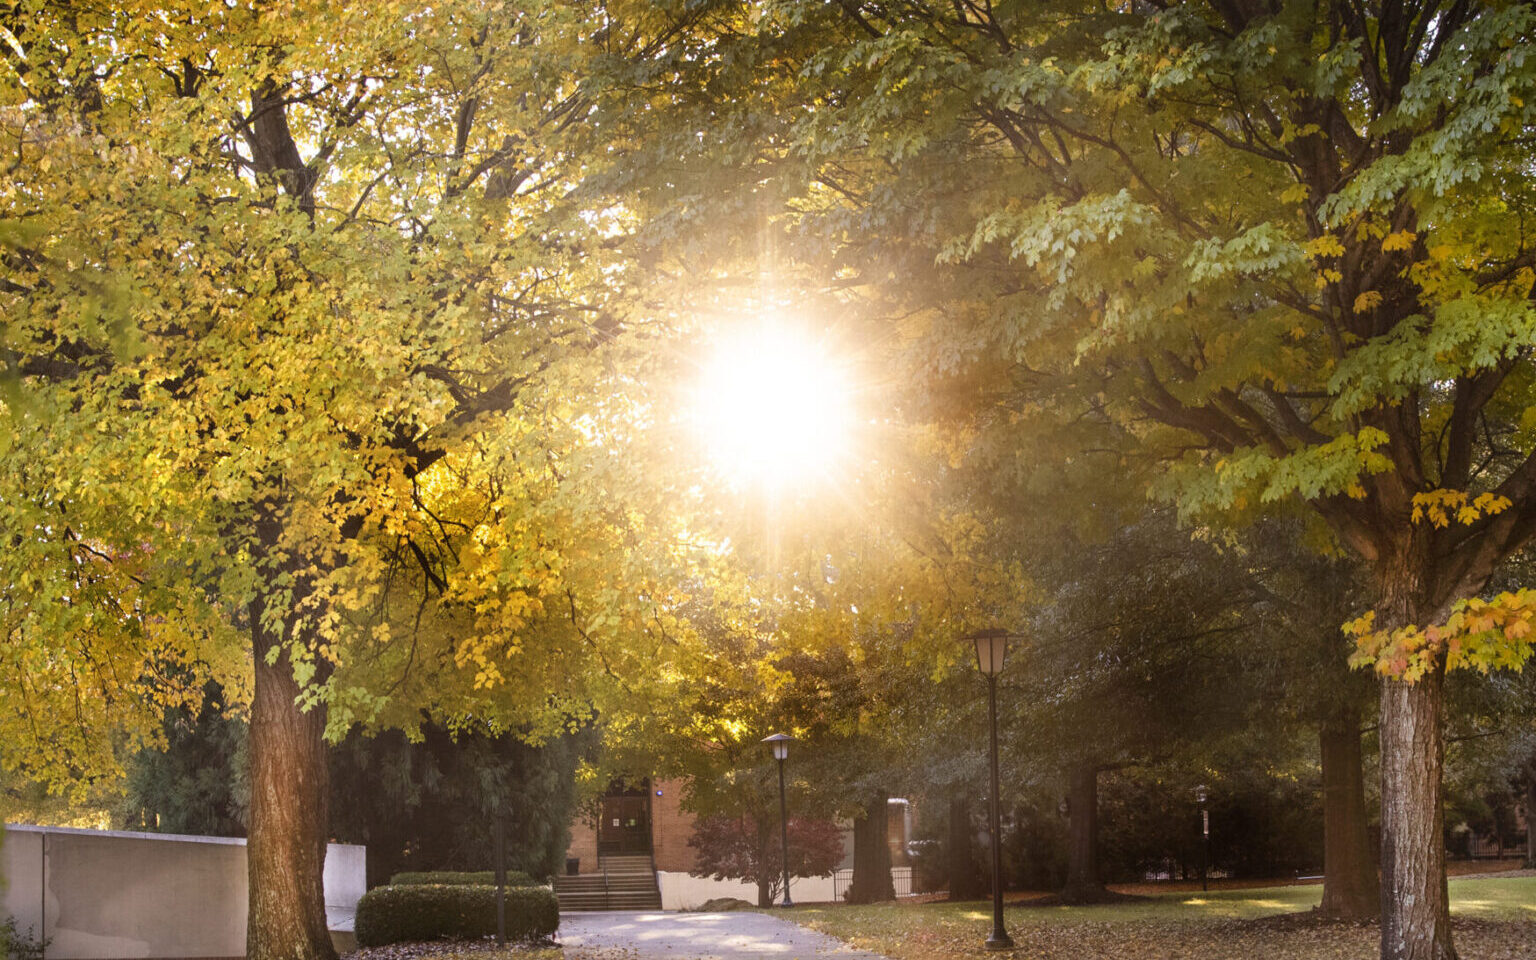 The sun shining through trees on campus